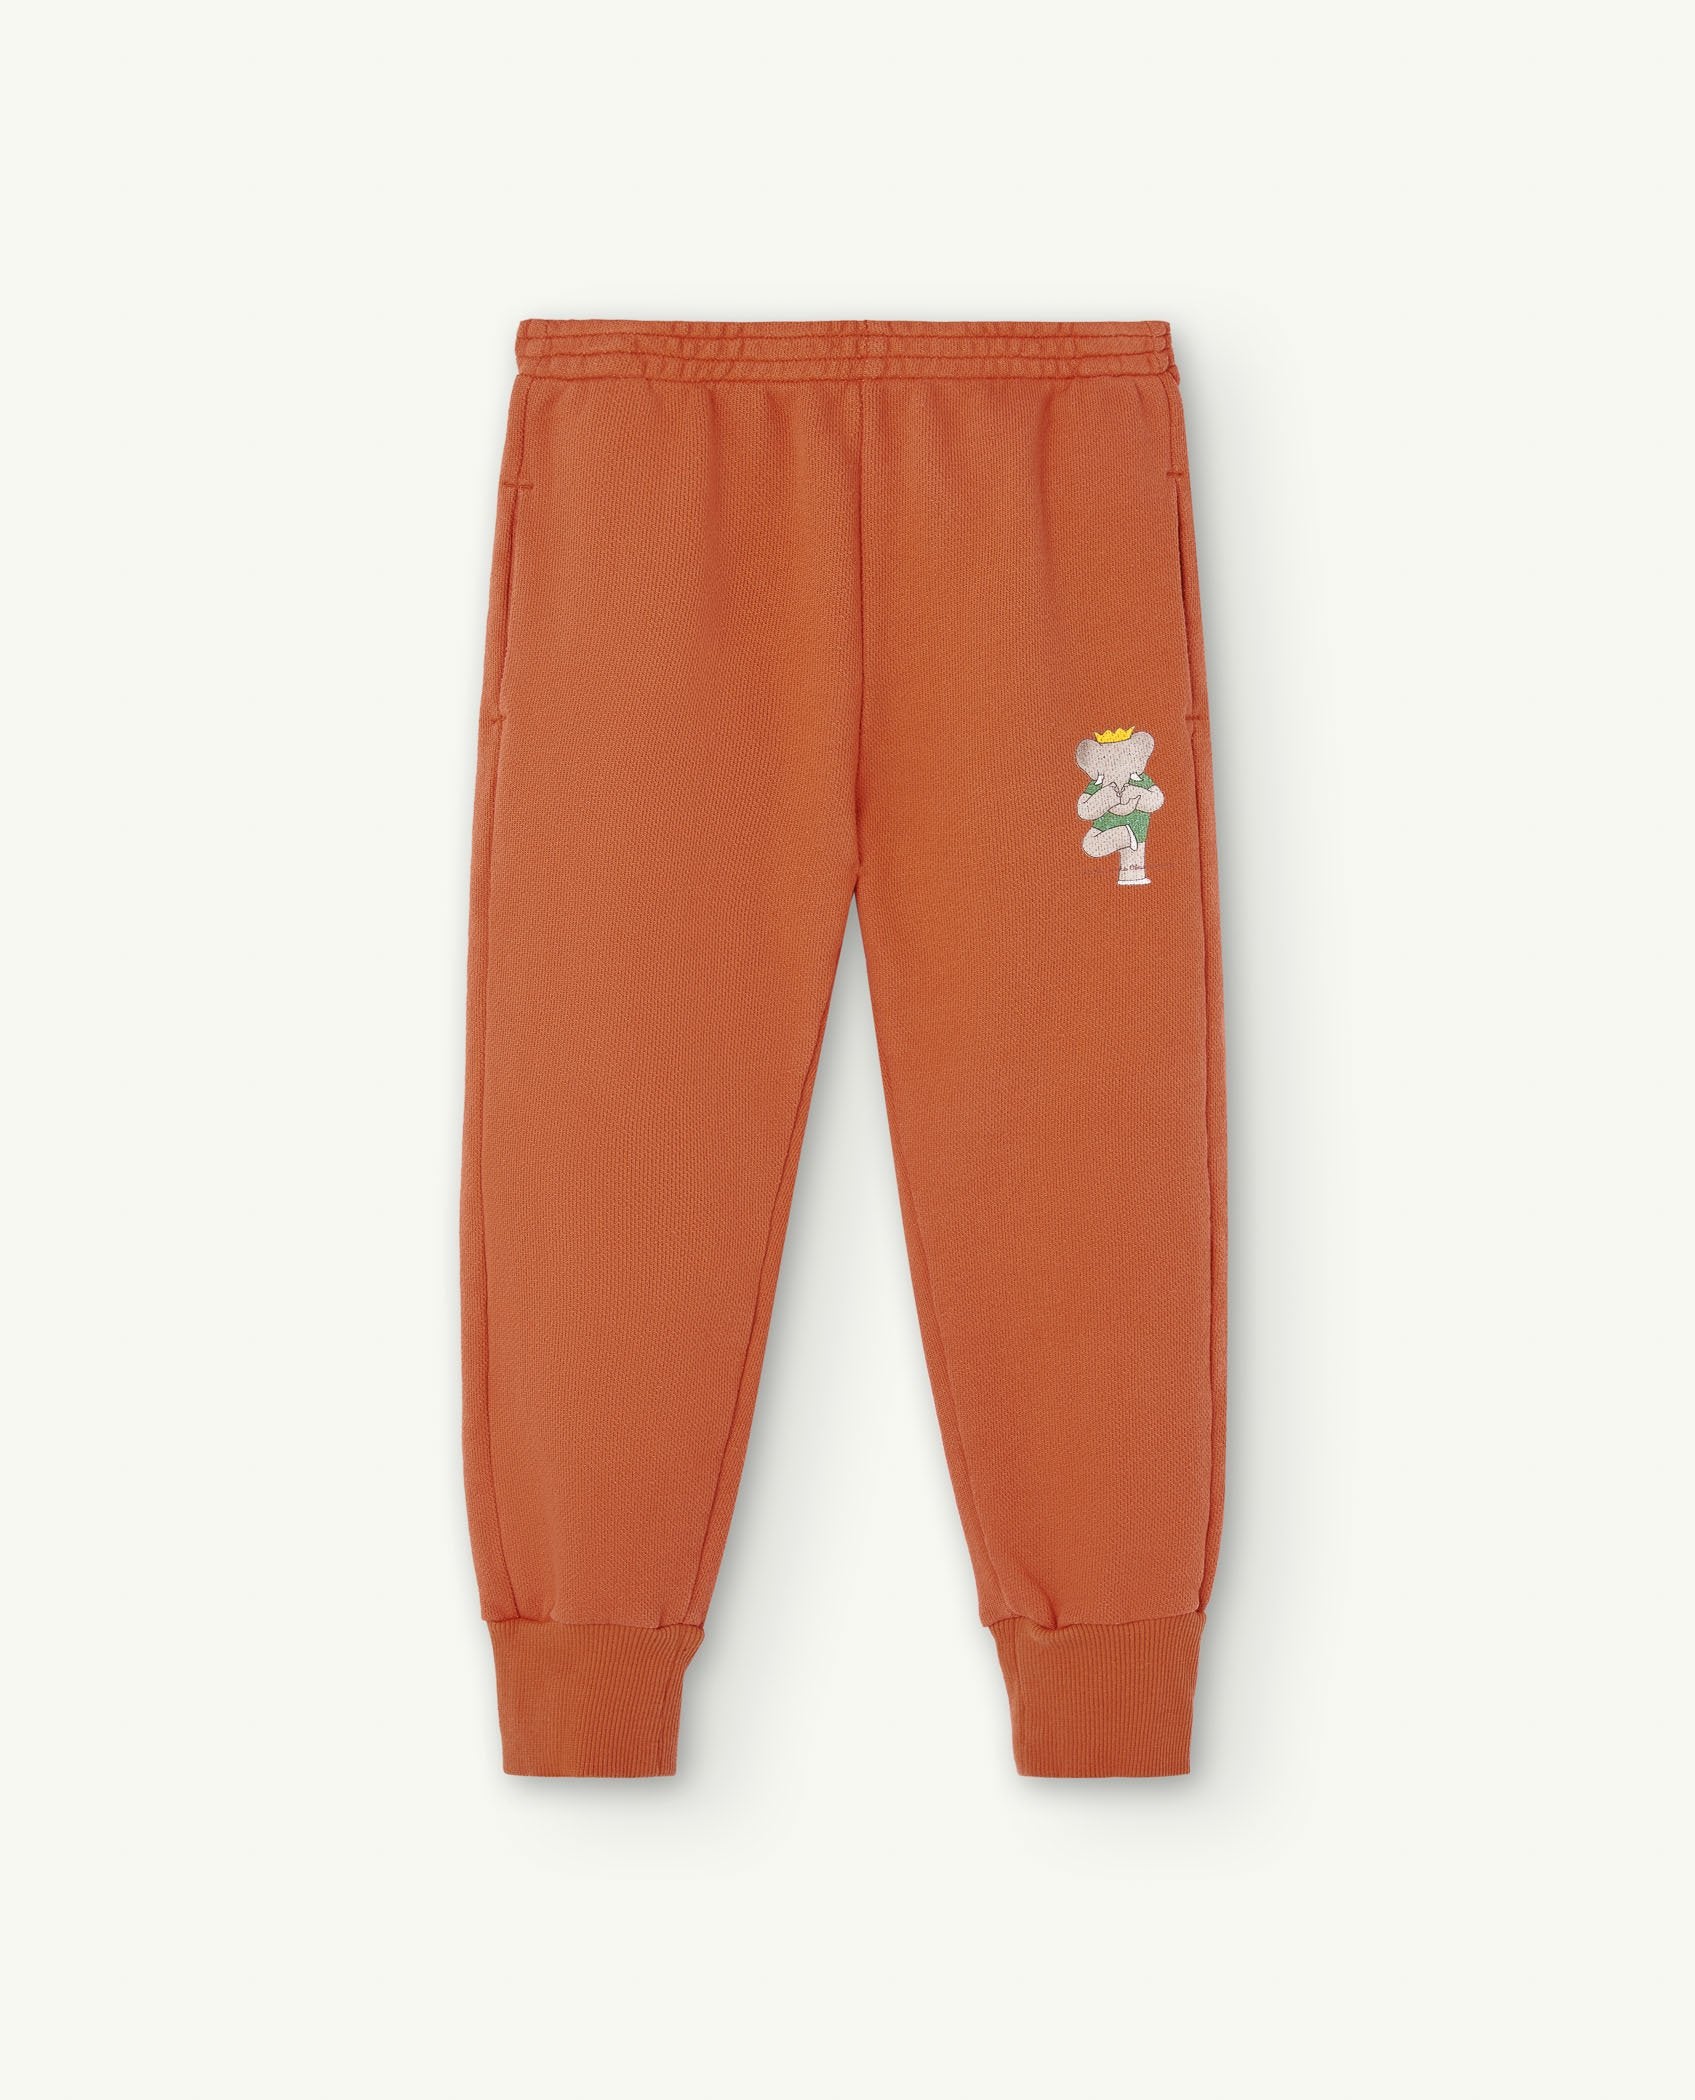 Babar Orange Panther Sweatpants PRODUCT FRONT